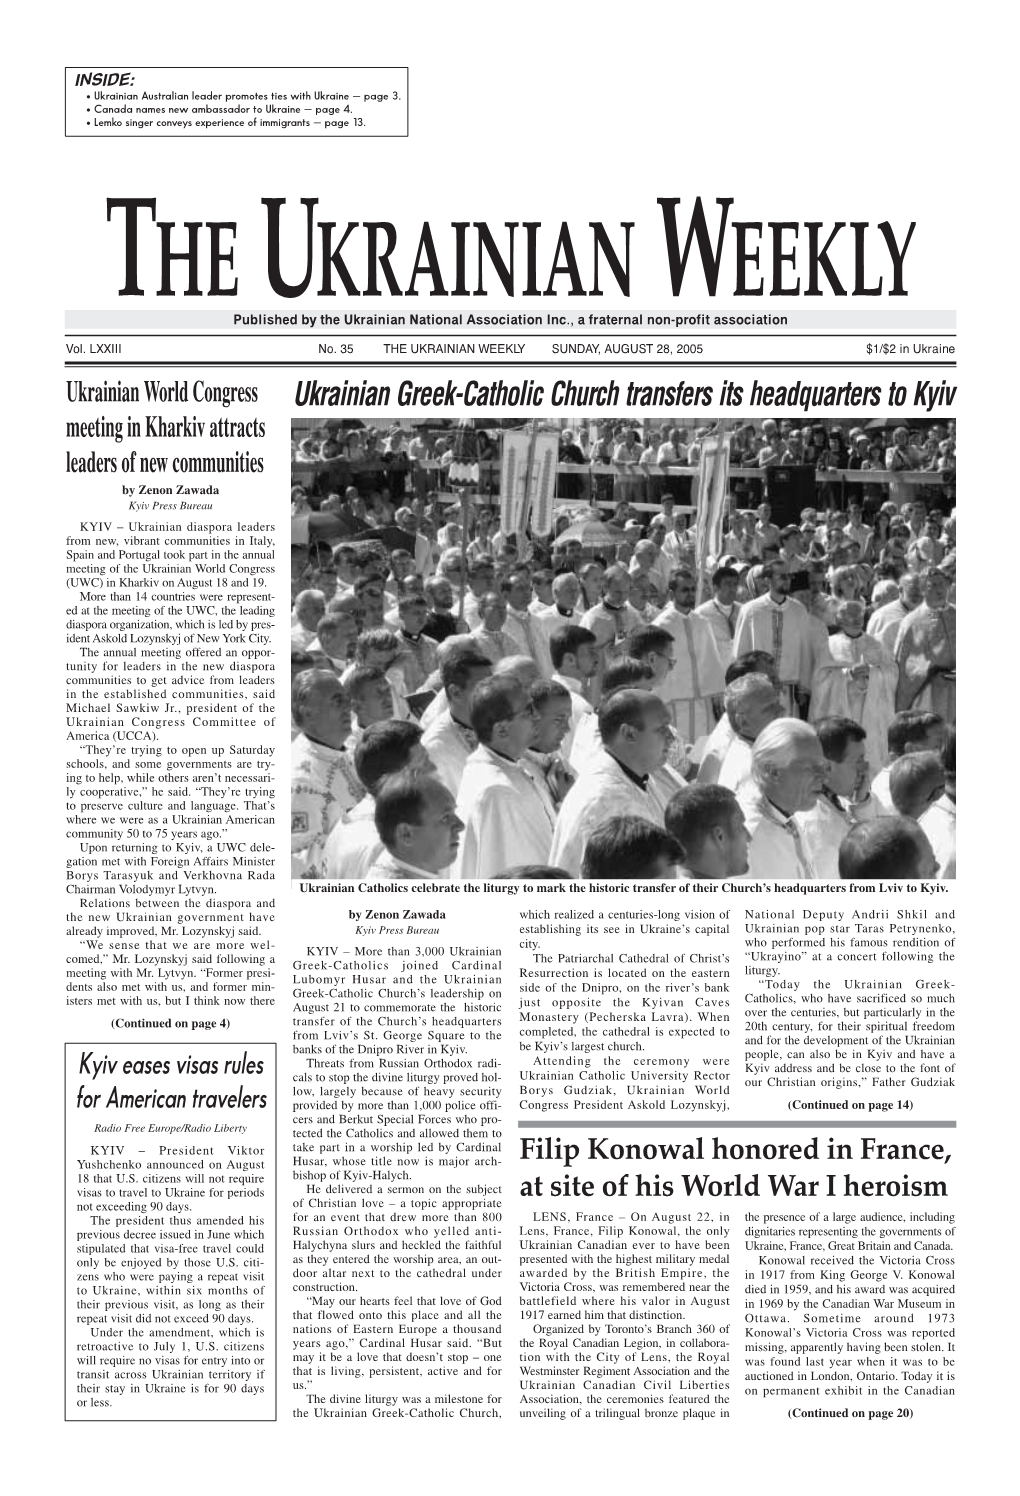 The Ukrainian Weekly 2005, No.35